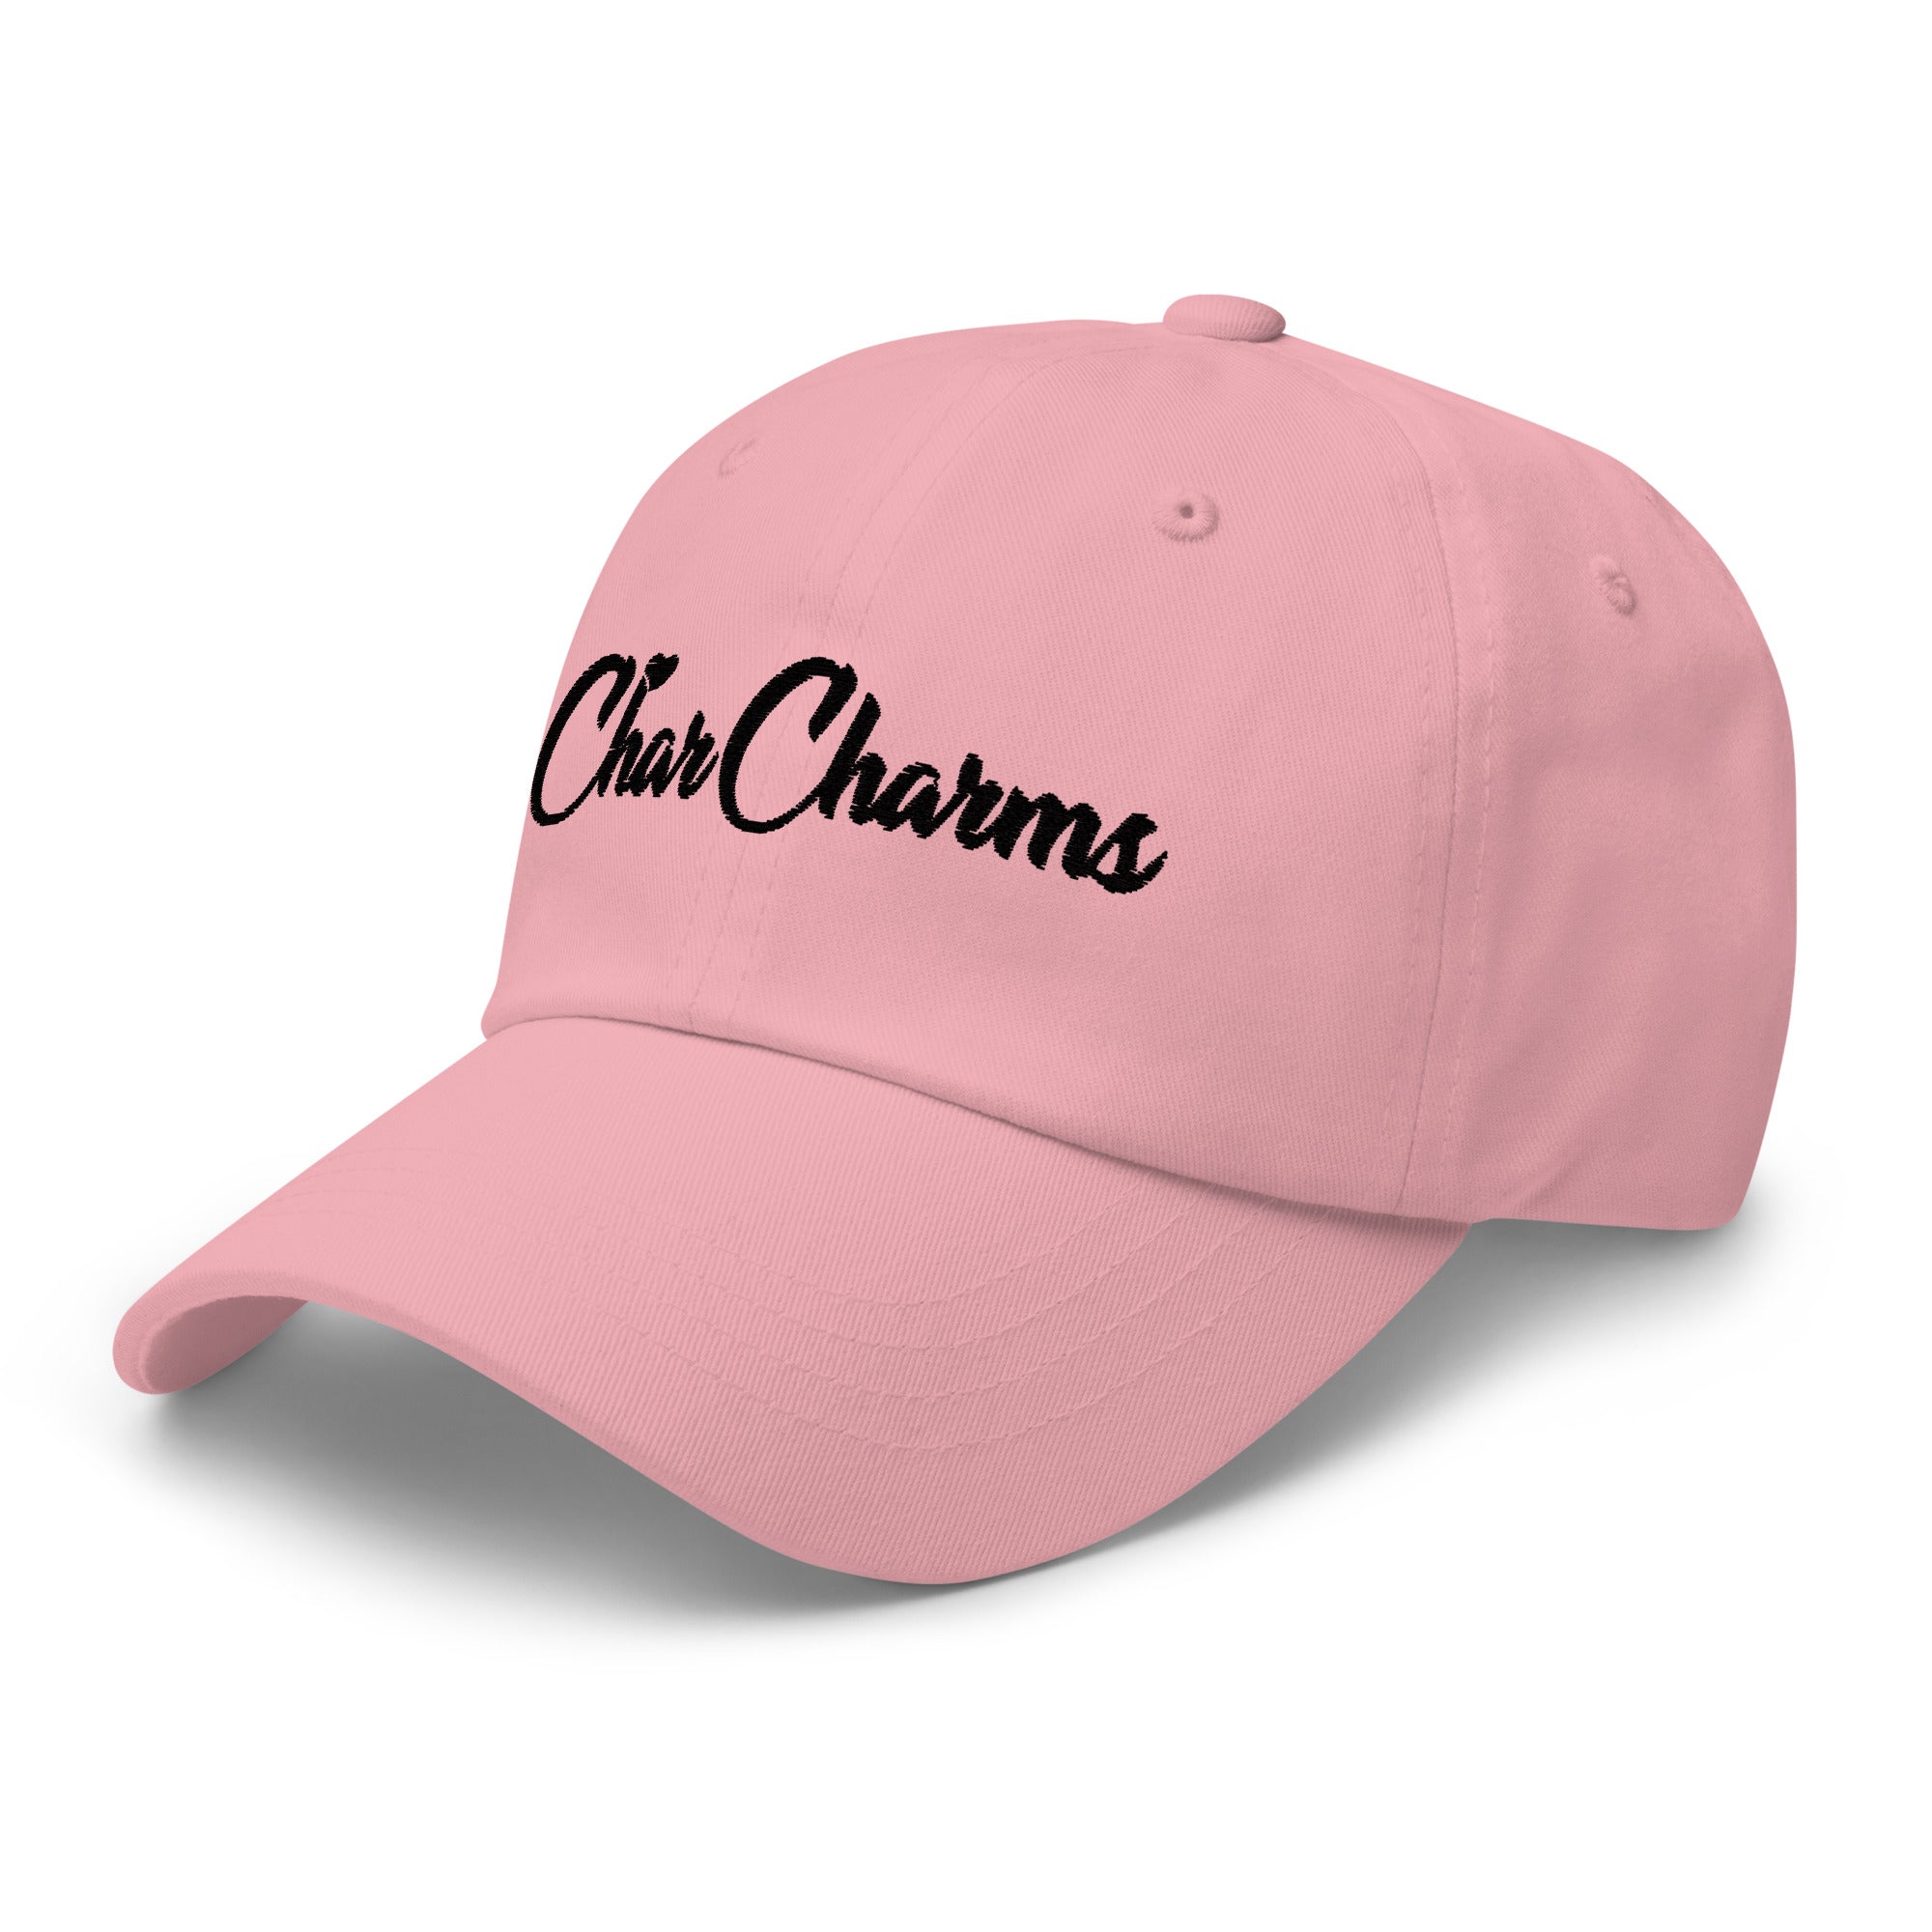 CharCharms Merchandise Baseball Cap